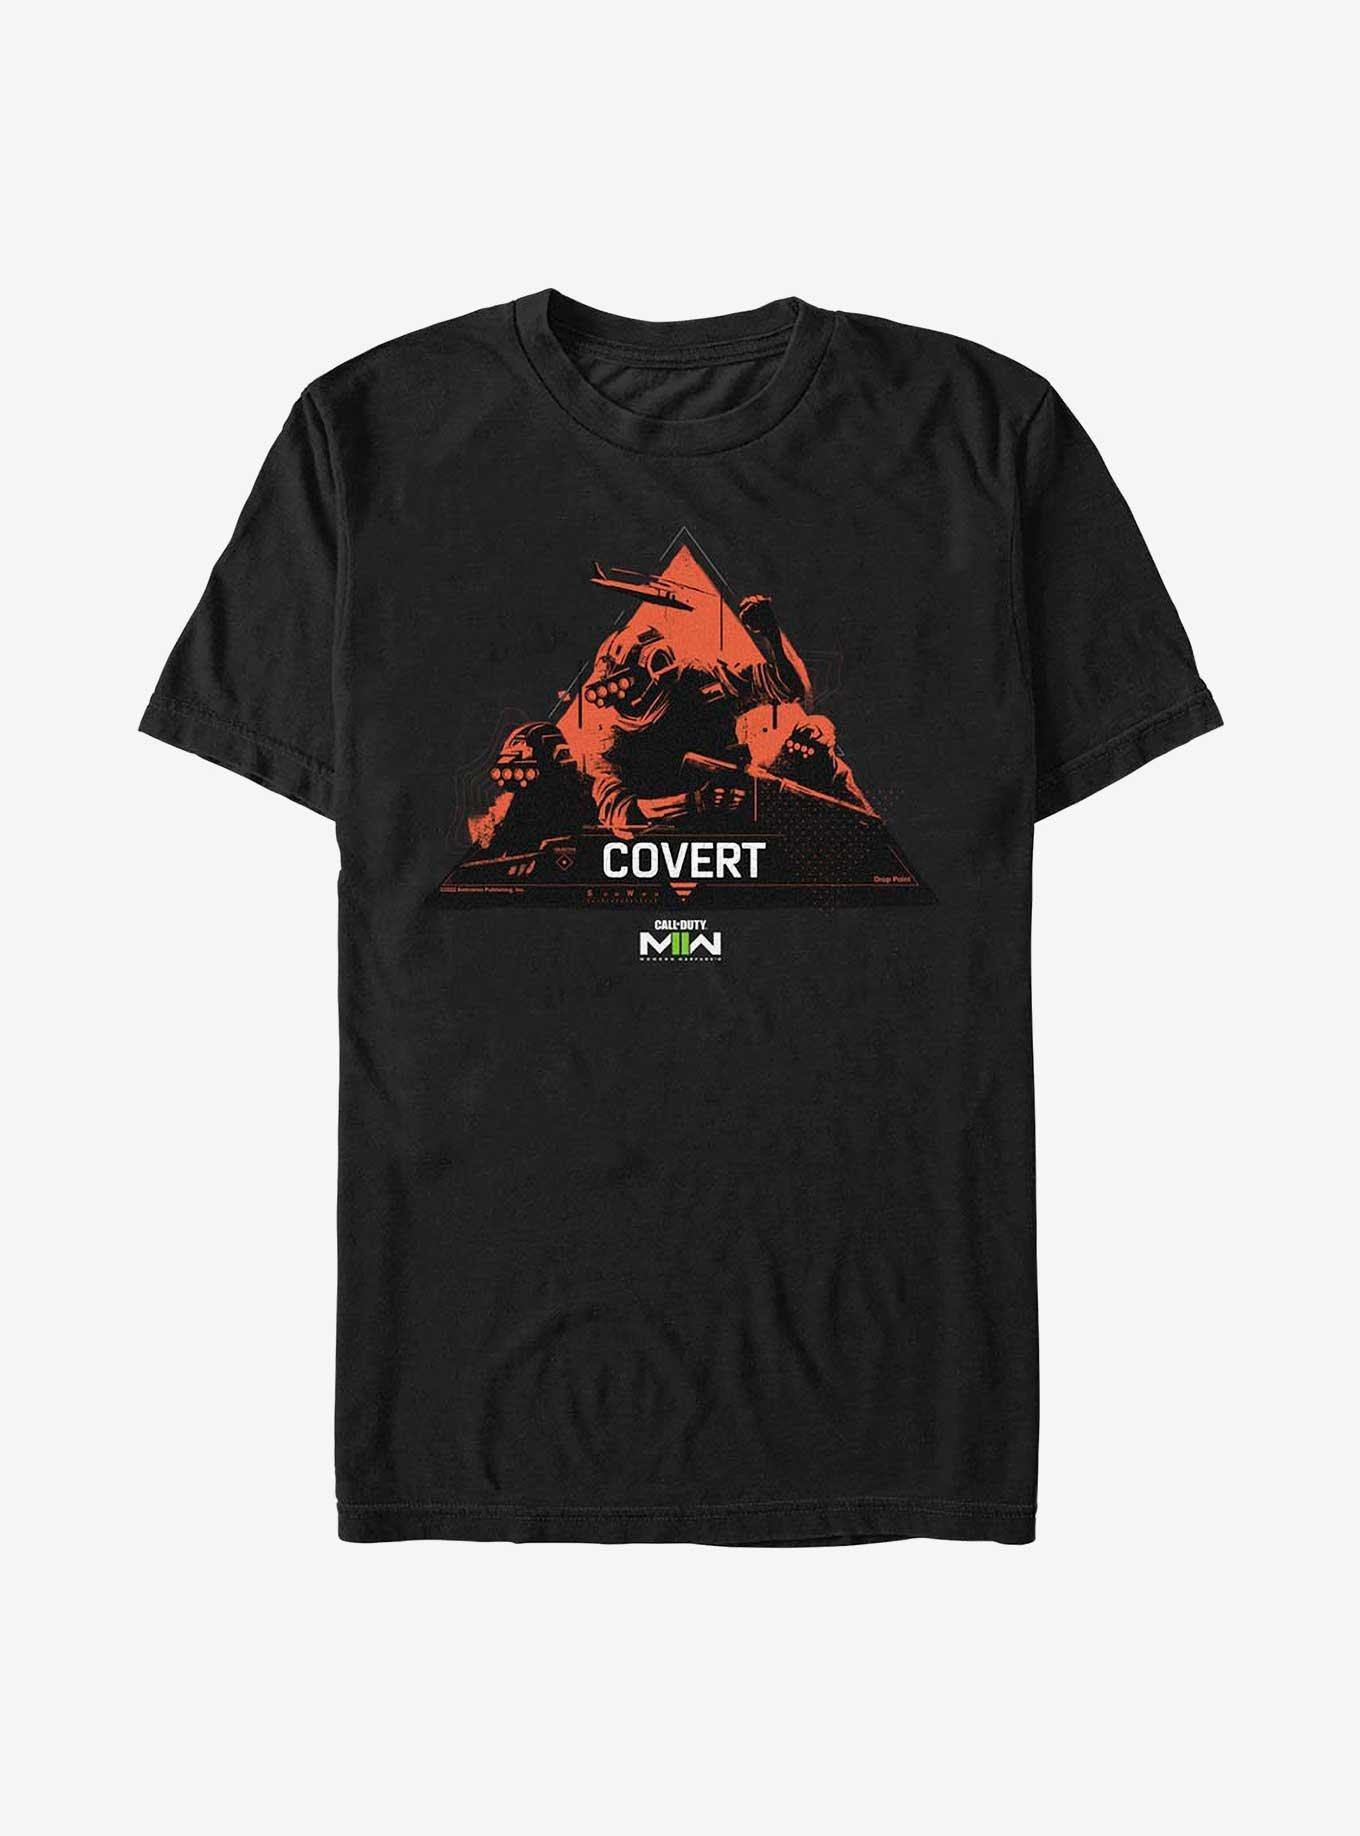 Call of Duty Covert Team T-Shirt, , hi-res